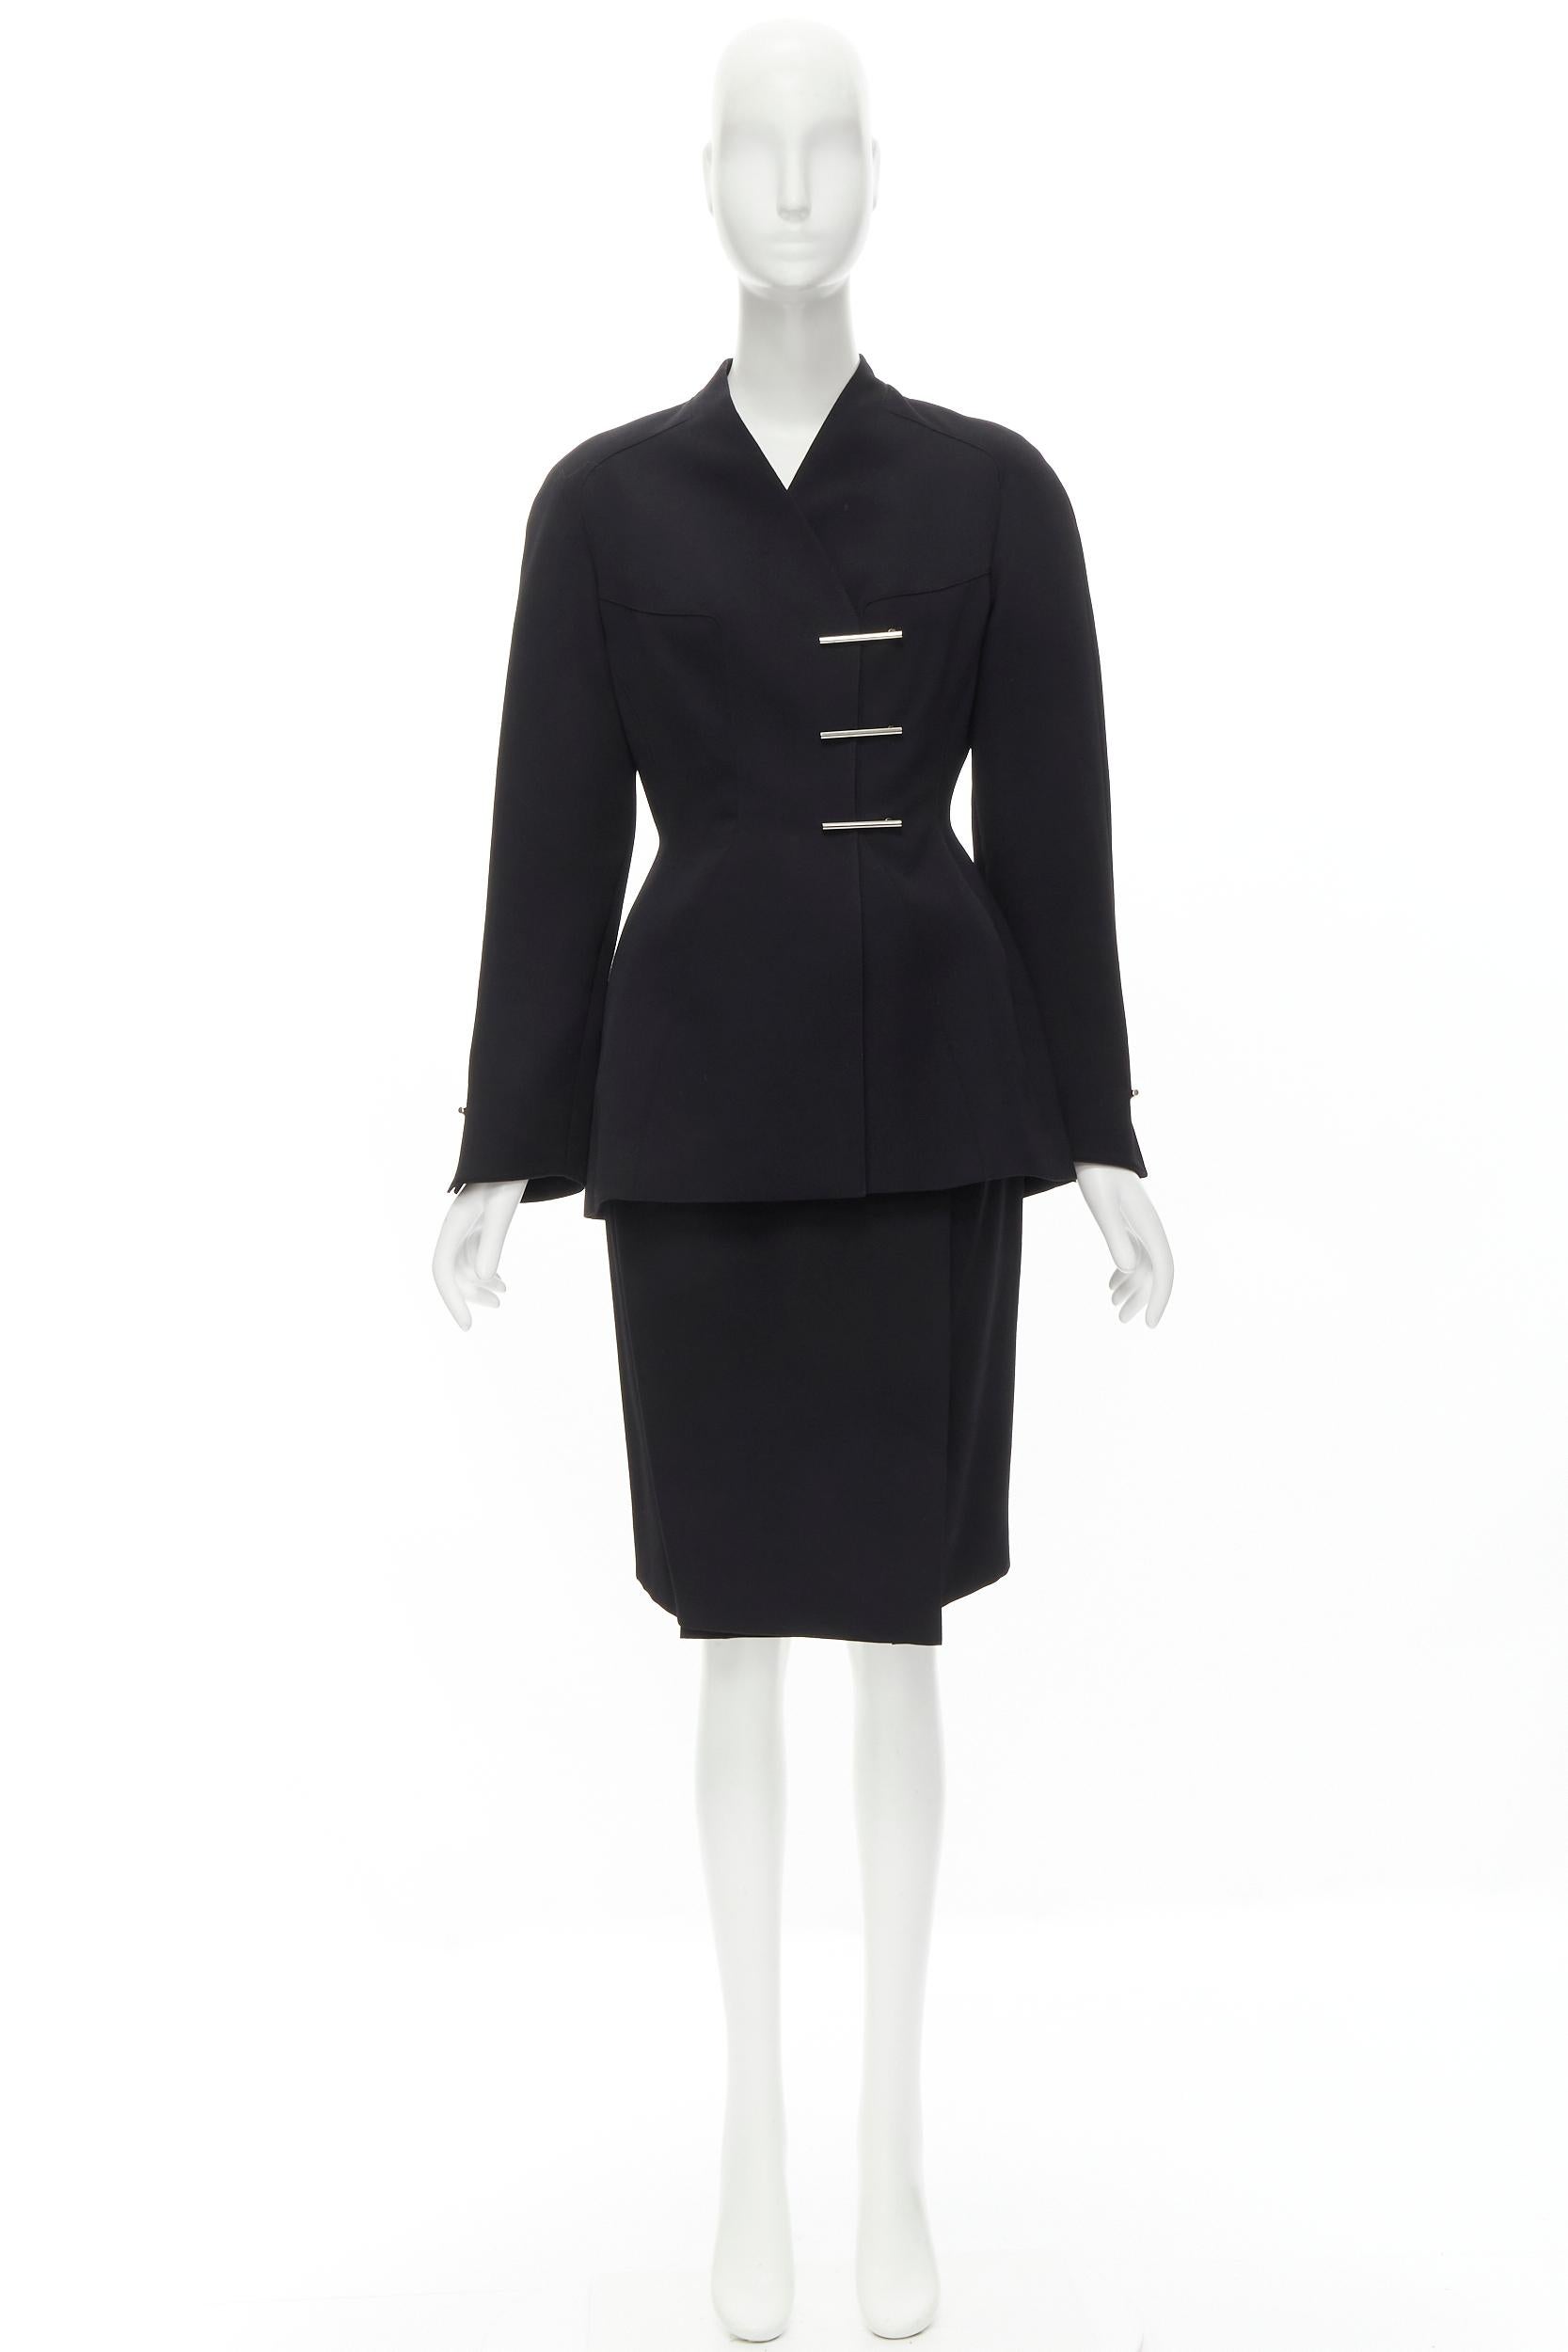 MUGLER Vintage silver bar double breasted contour peplum jacket skirt FR38 S For Sale 6